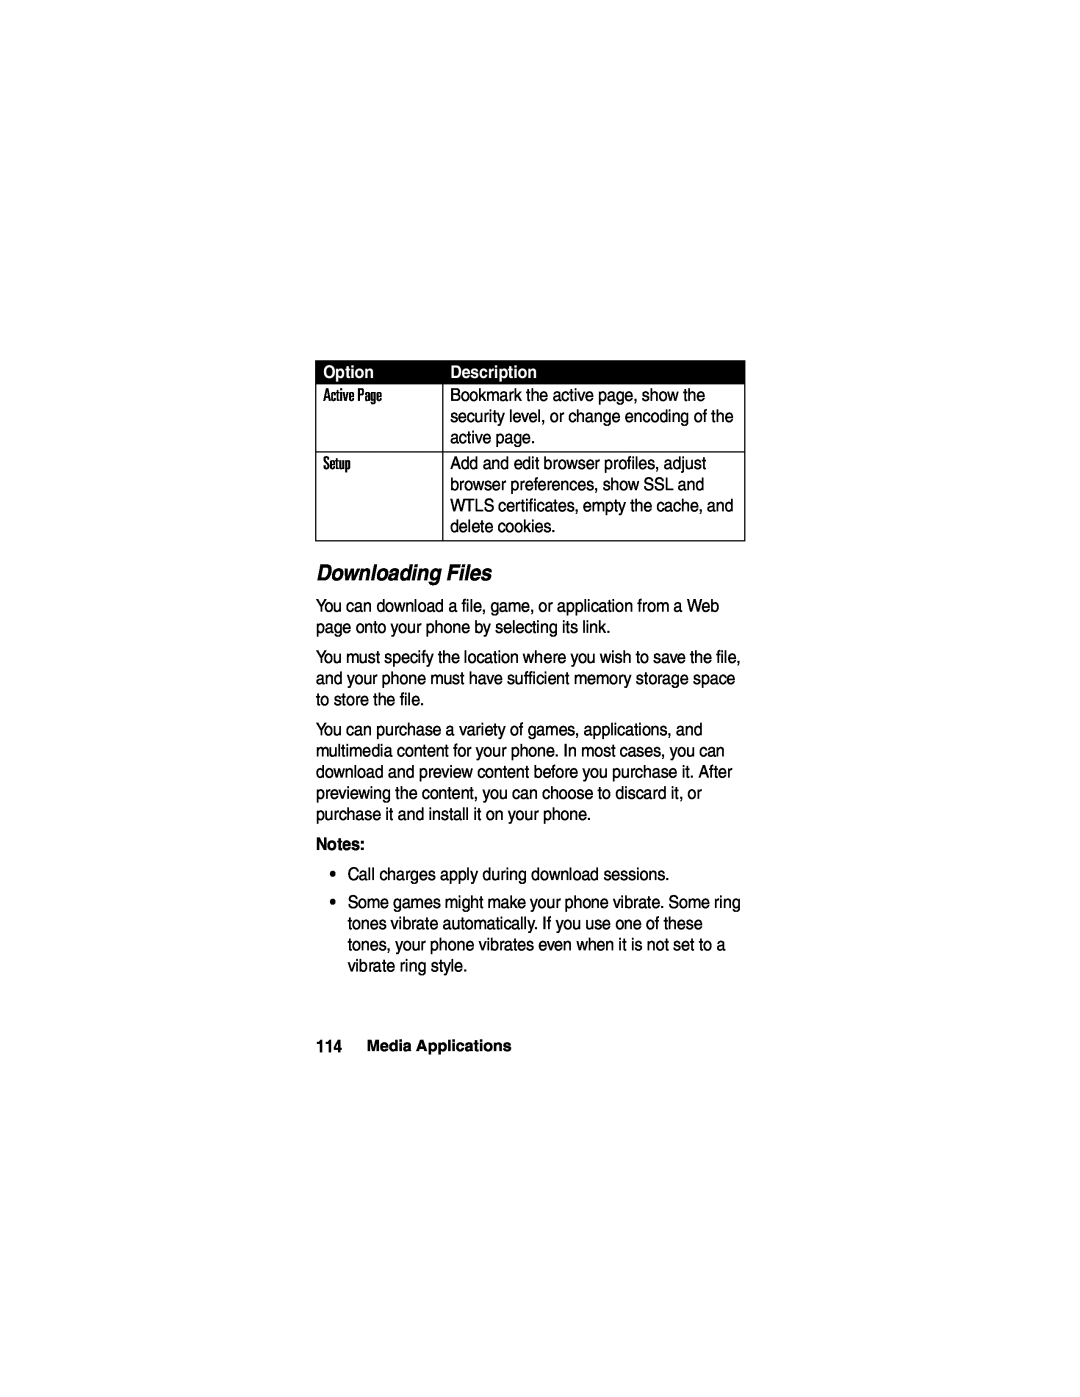 Motorola A780 manual Downloading Files, Option, Description 